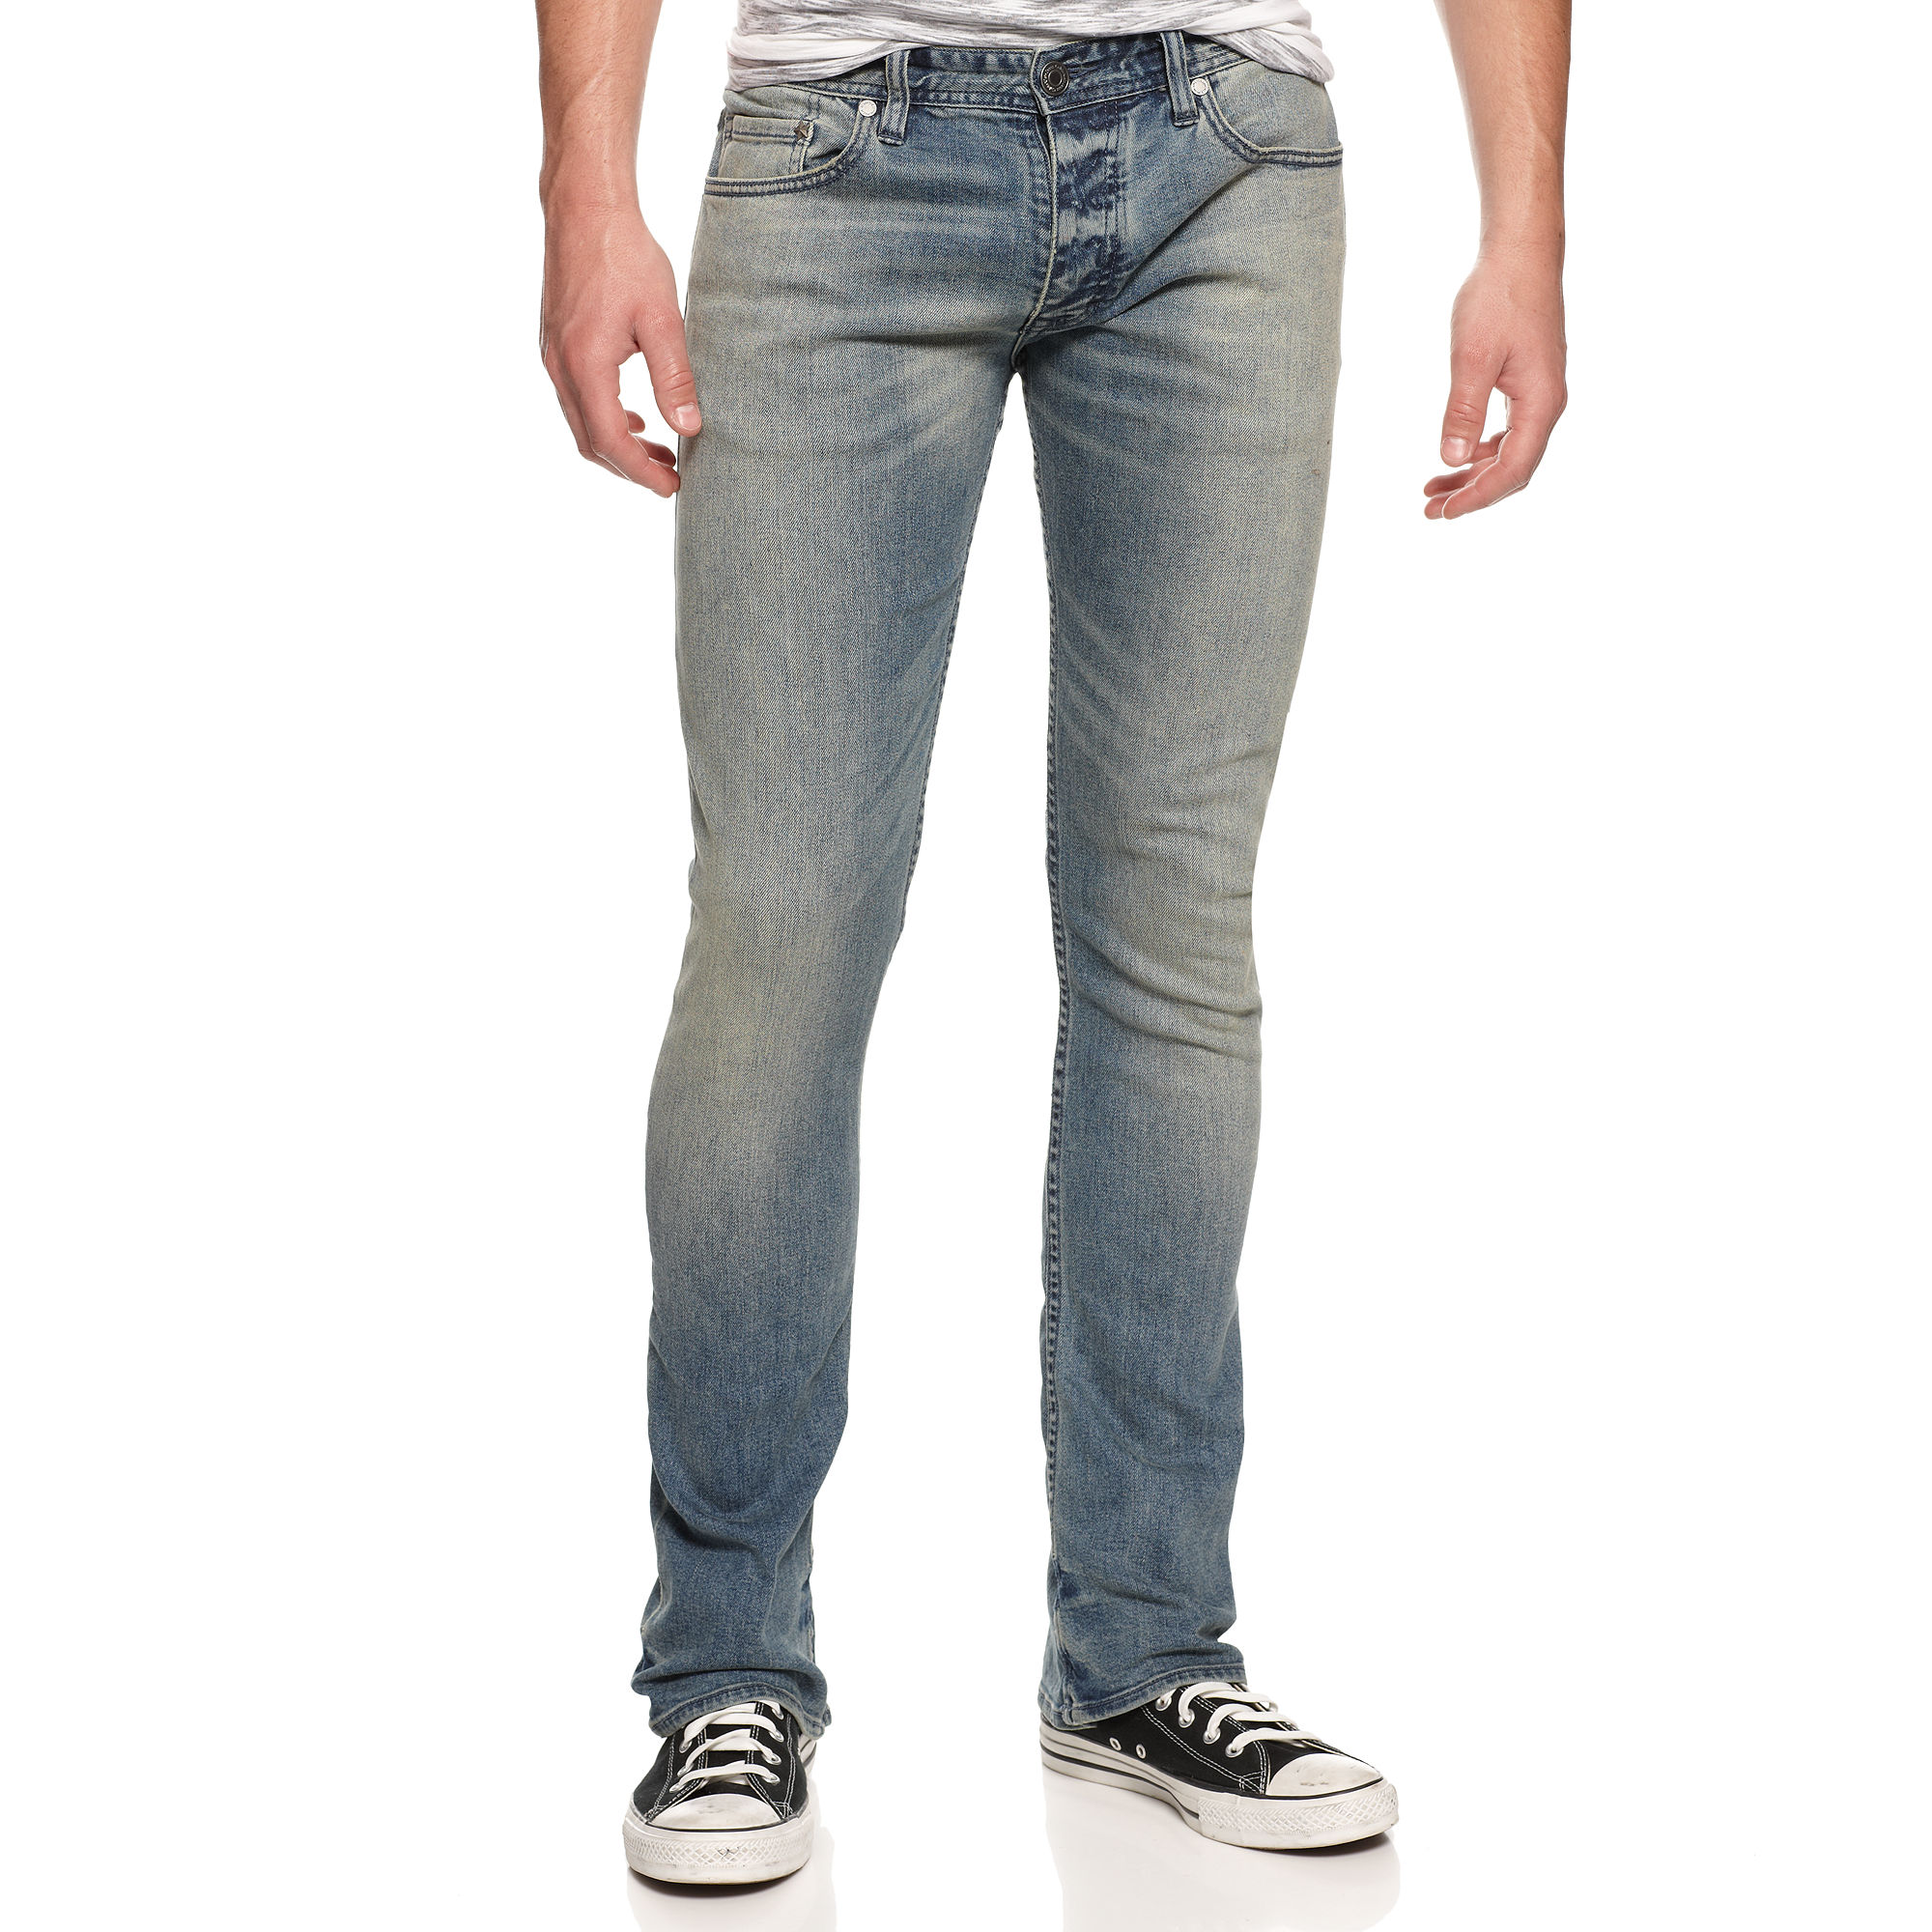 Lyst - Calvin Klein Jeans Rocker Kick Vagabond Slim Bootcut in Blue for Men